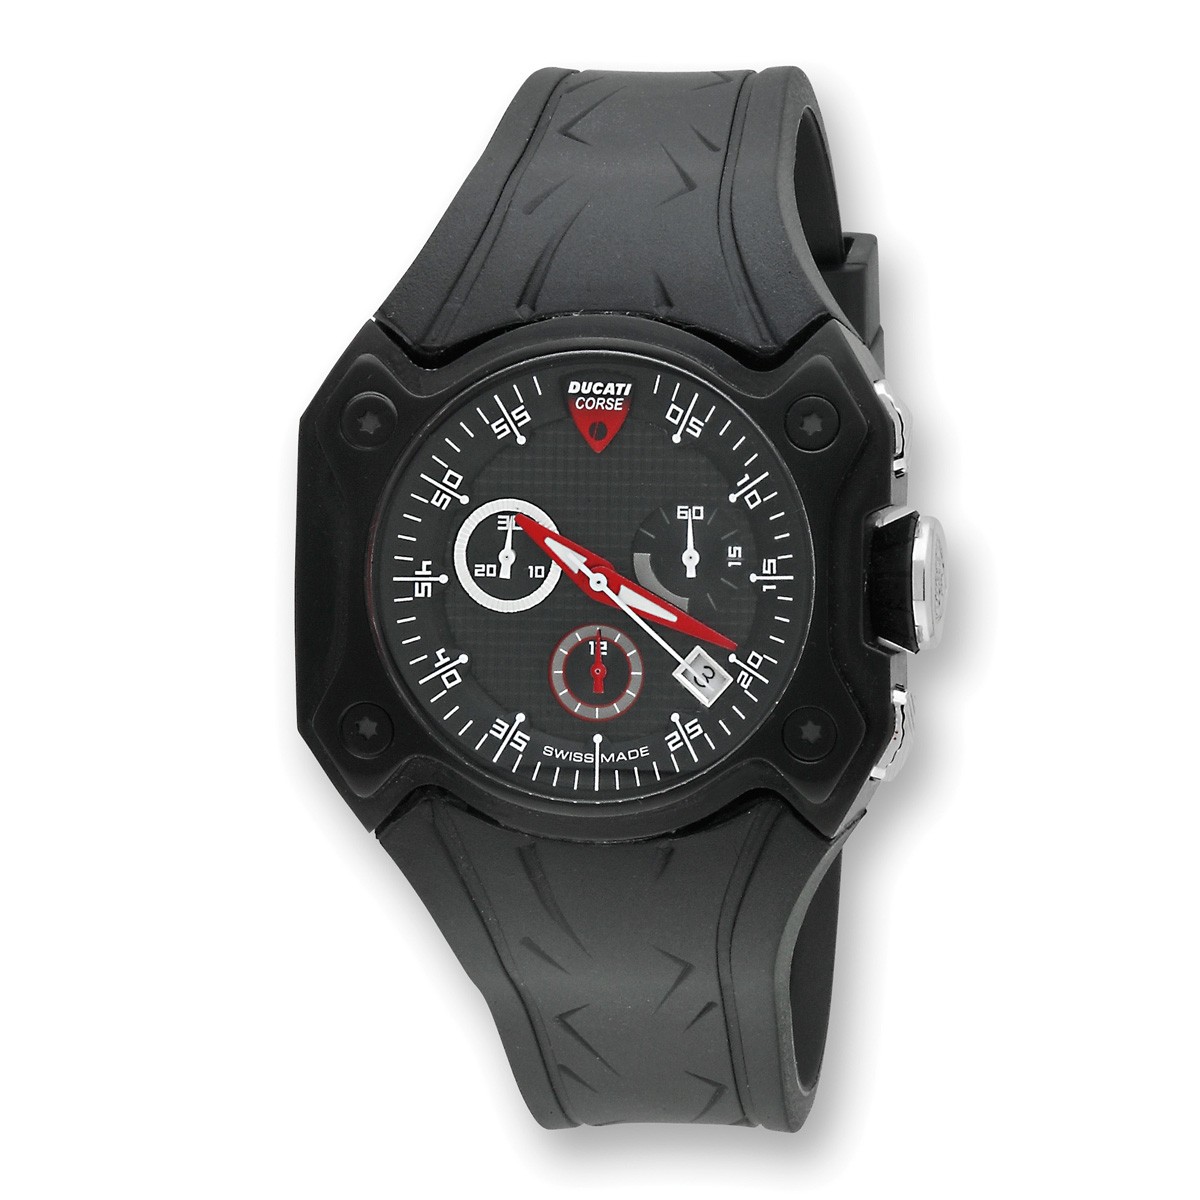 Ducati Corse Quartz Watch - DucatiStore